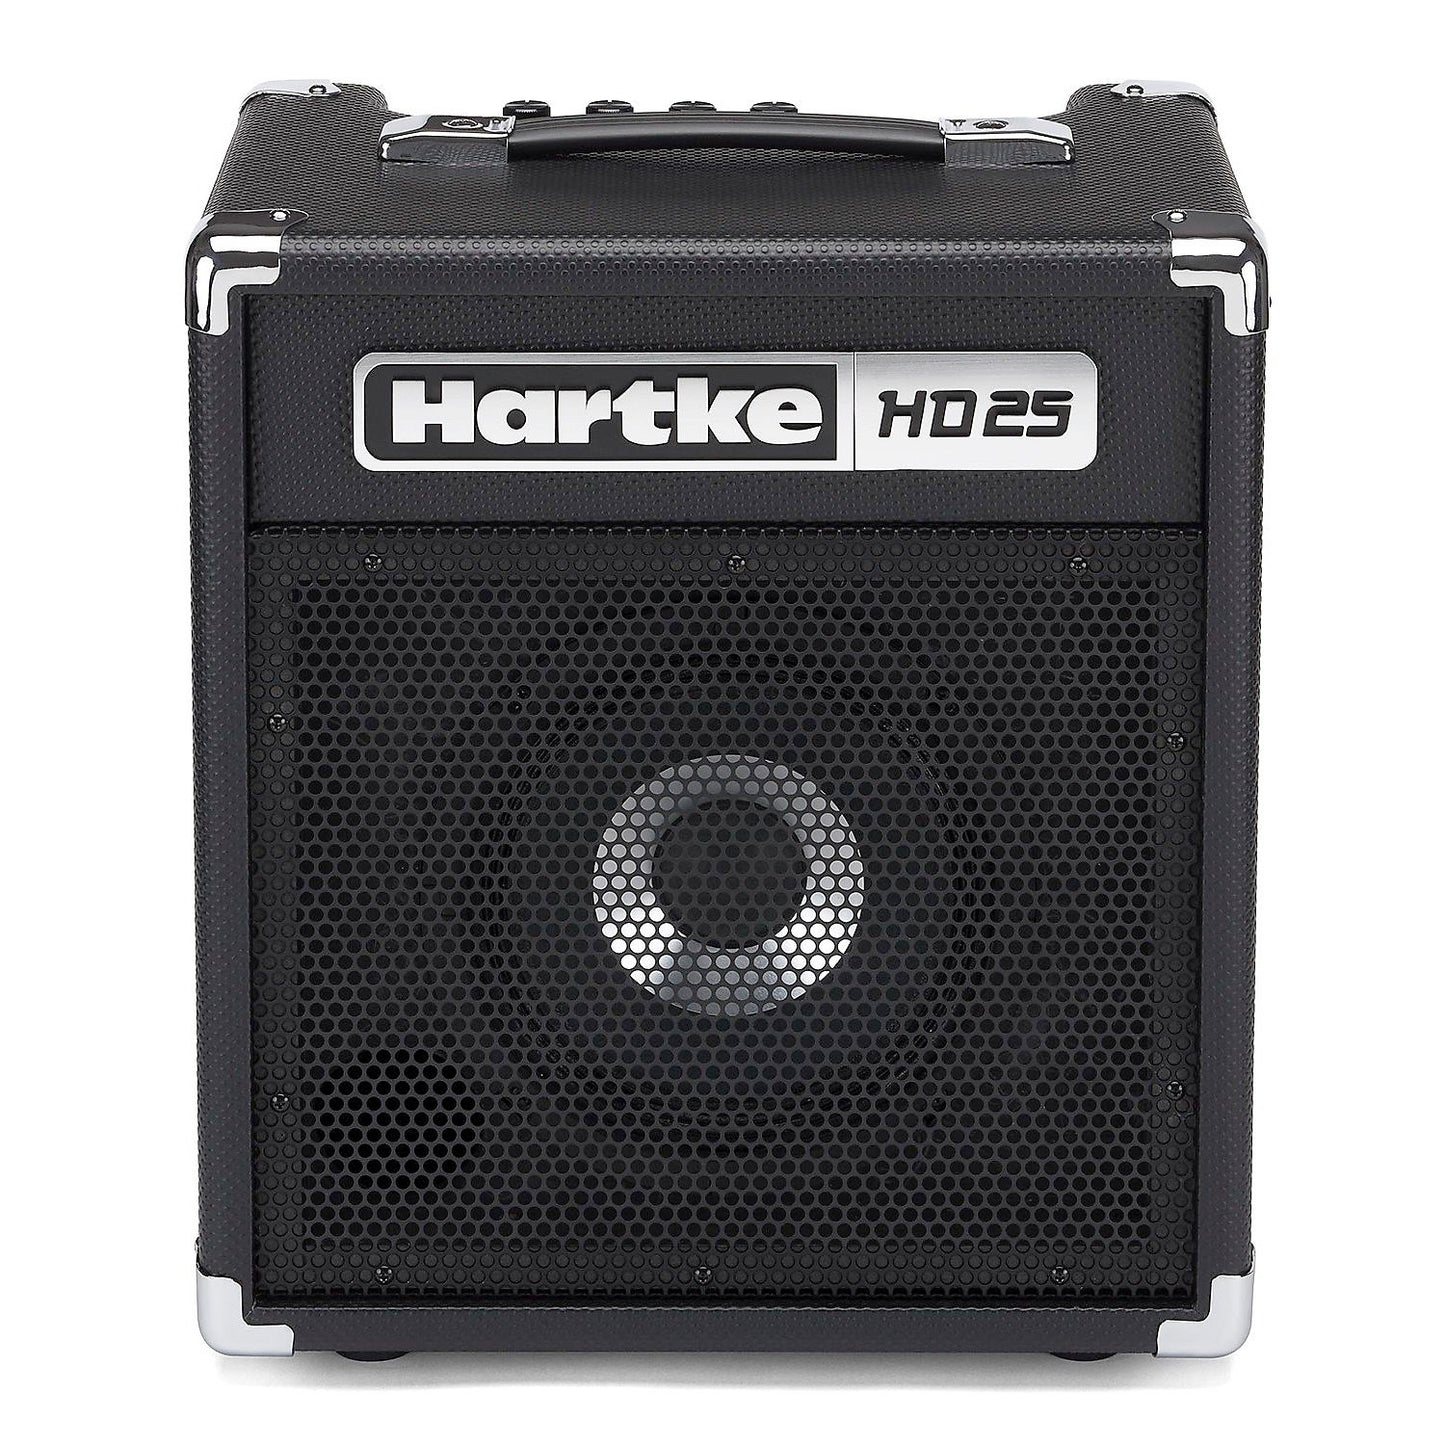 Hartke HD25 HyDrive Bass Combo Amplifier (25 Watts, 1x8 Inch)